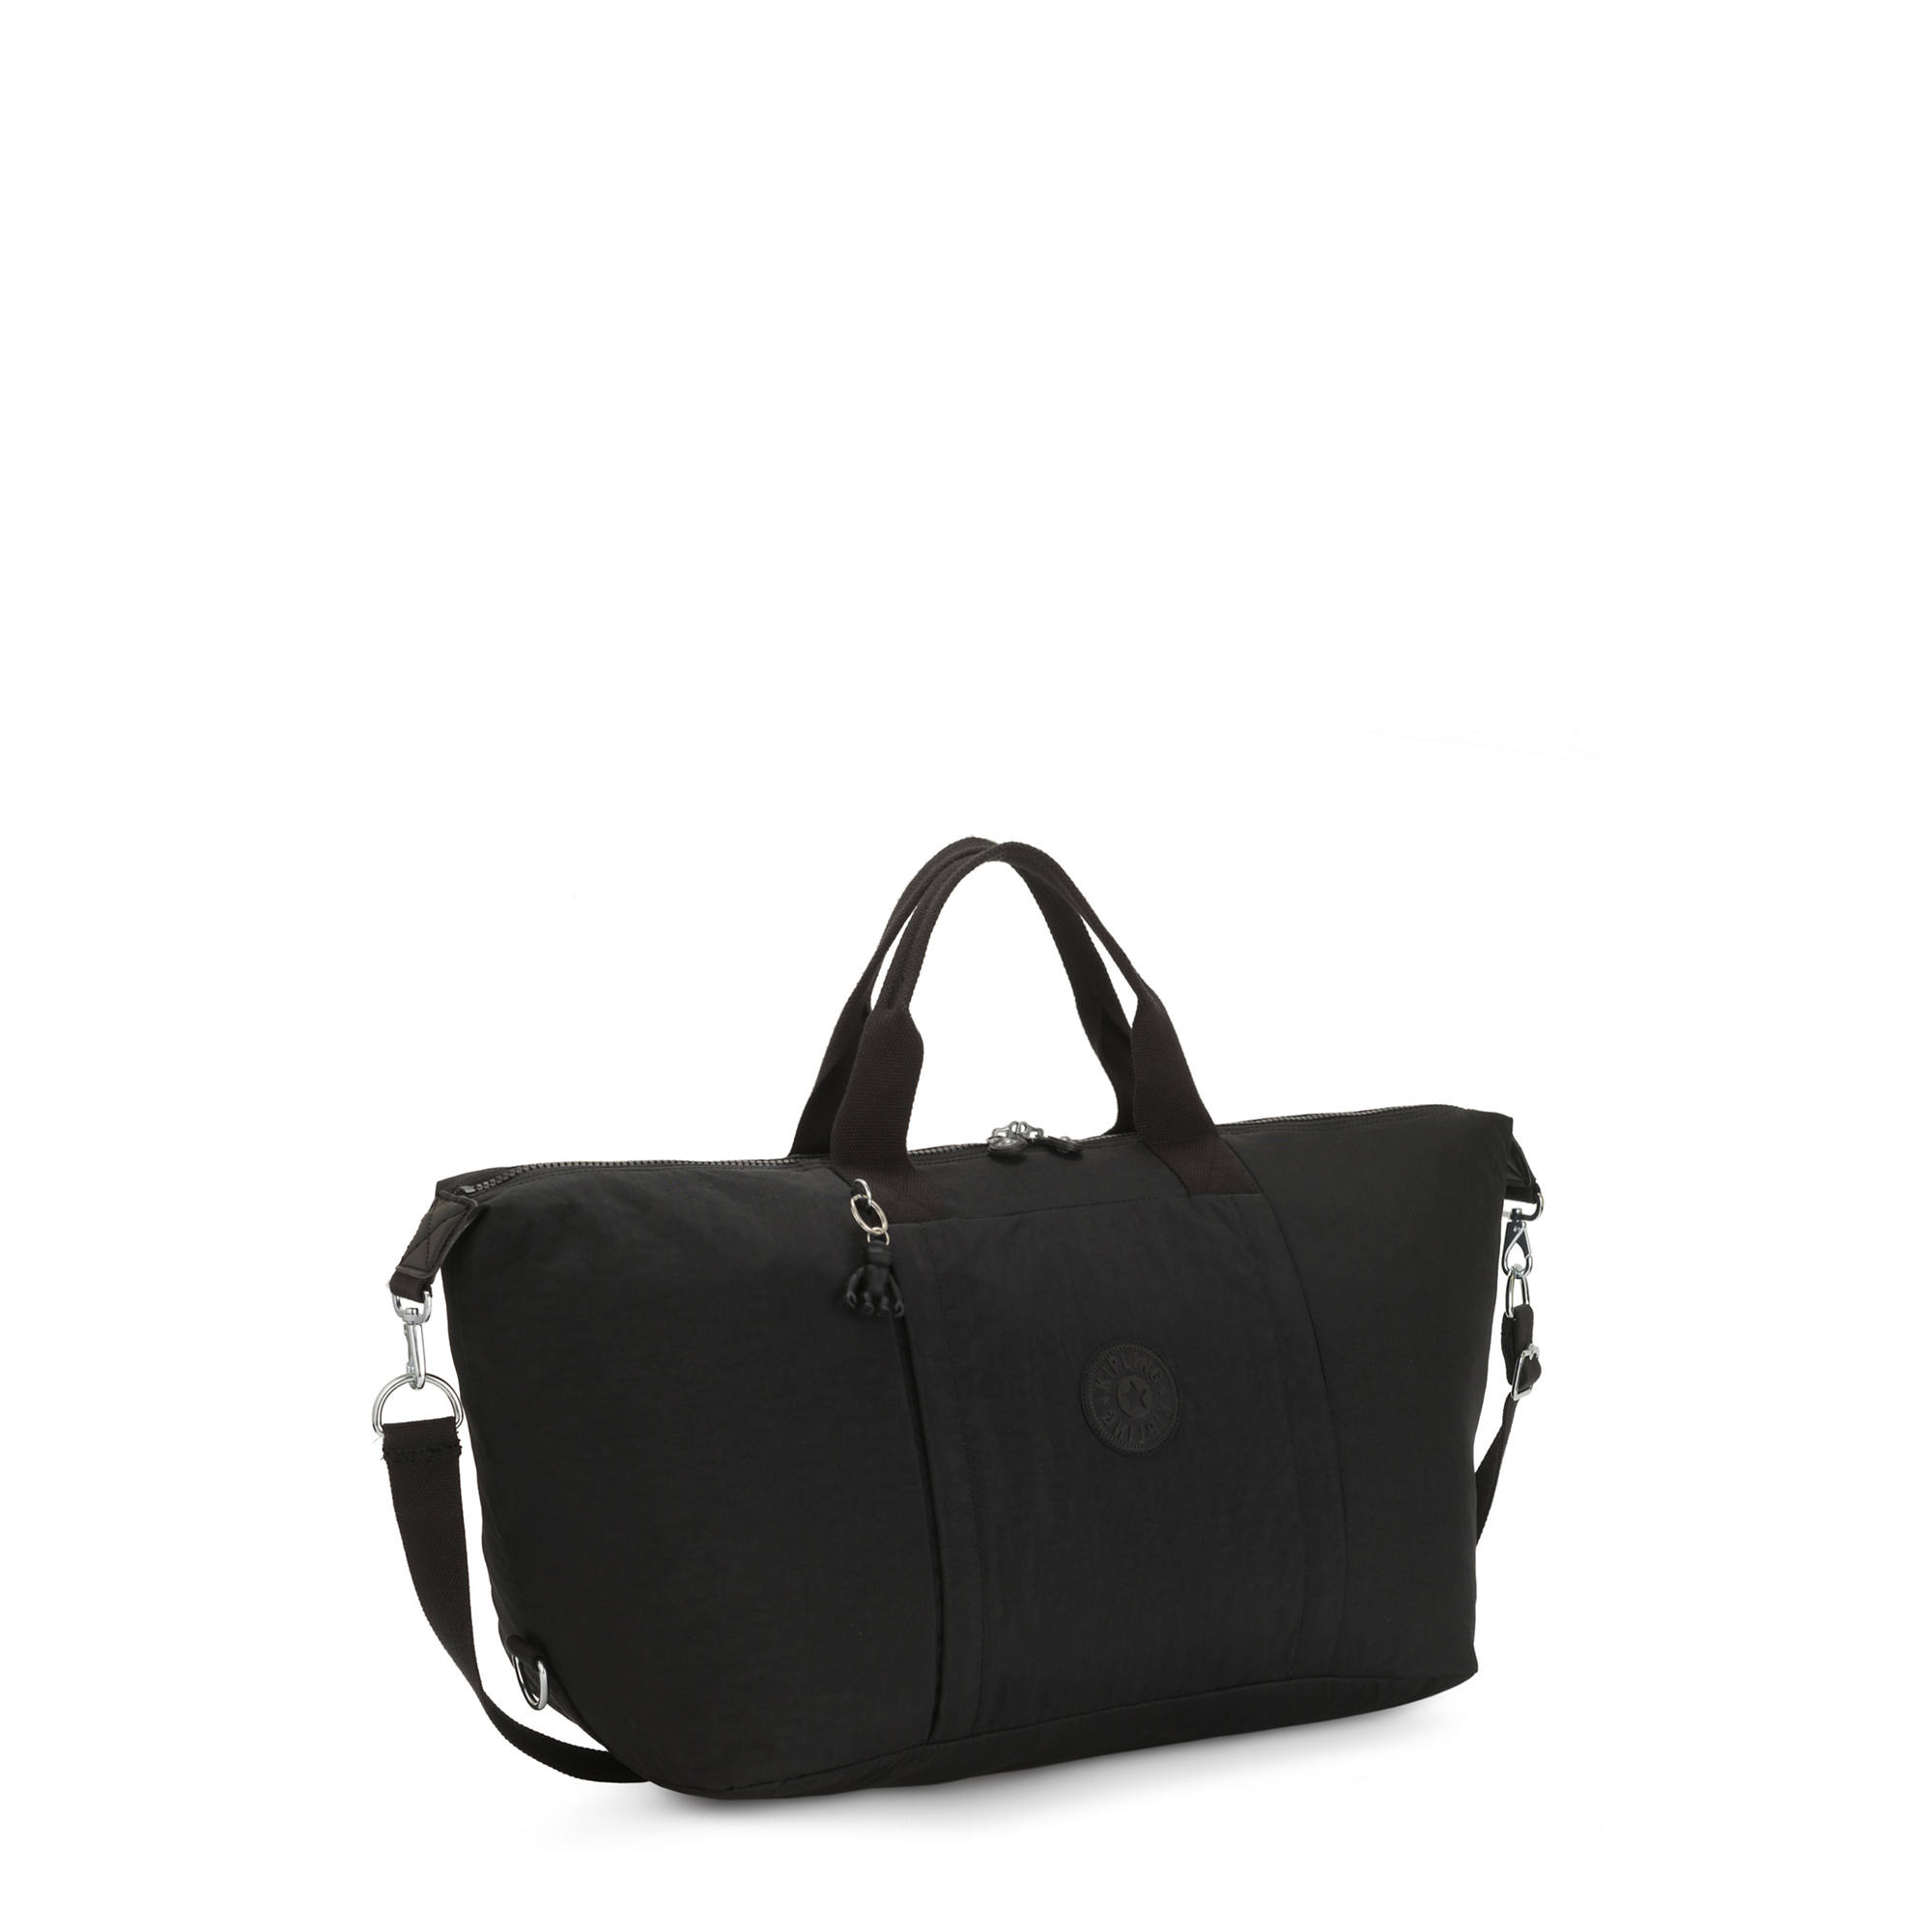 Kipling Women's Bori Duffle Bag Black Noir One Size for sale online | eBay